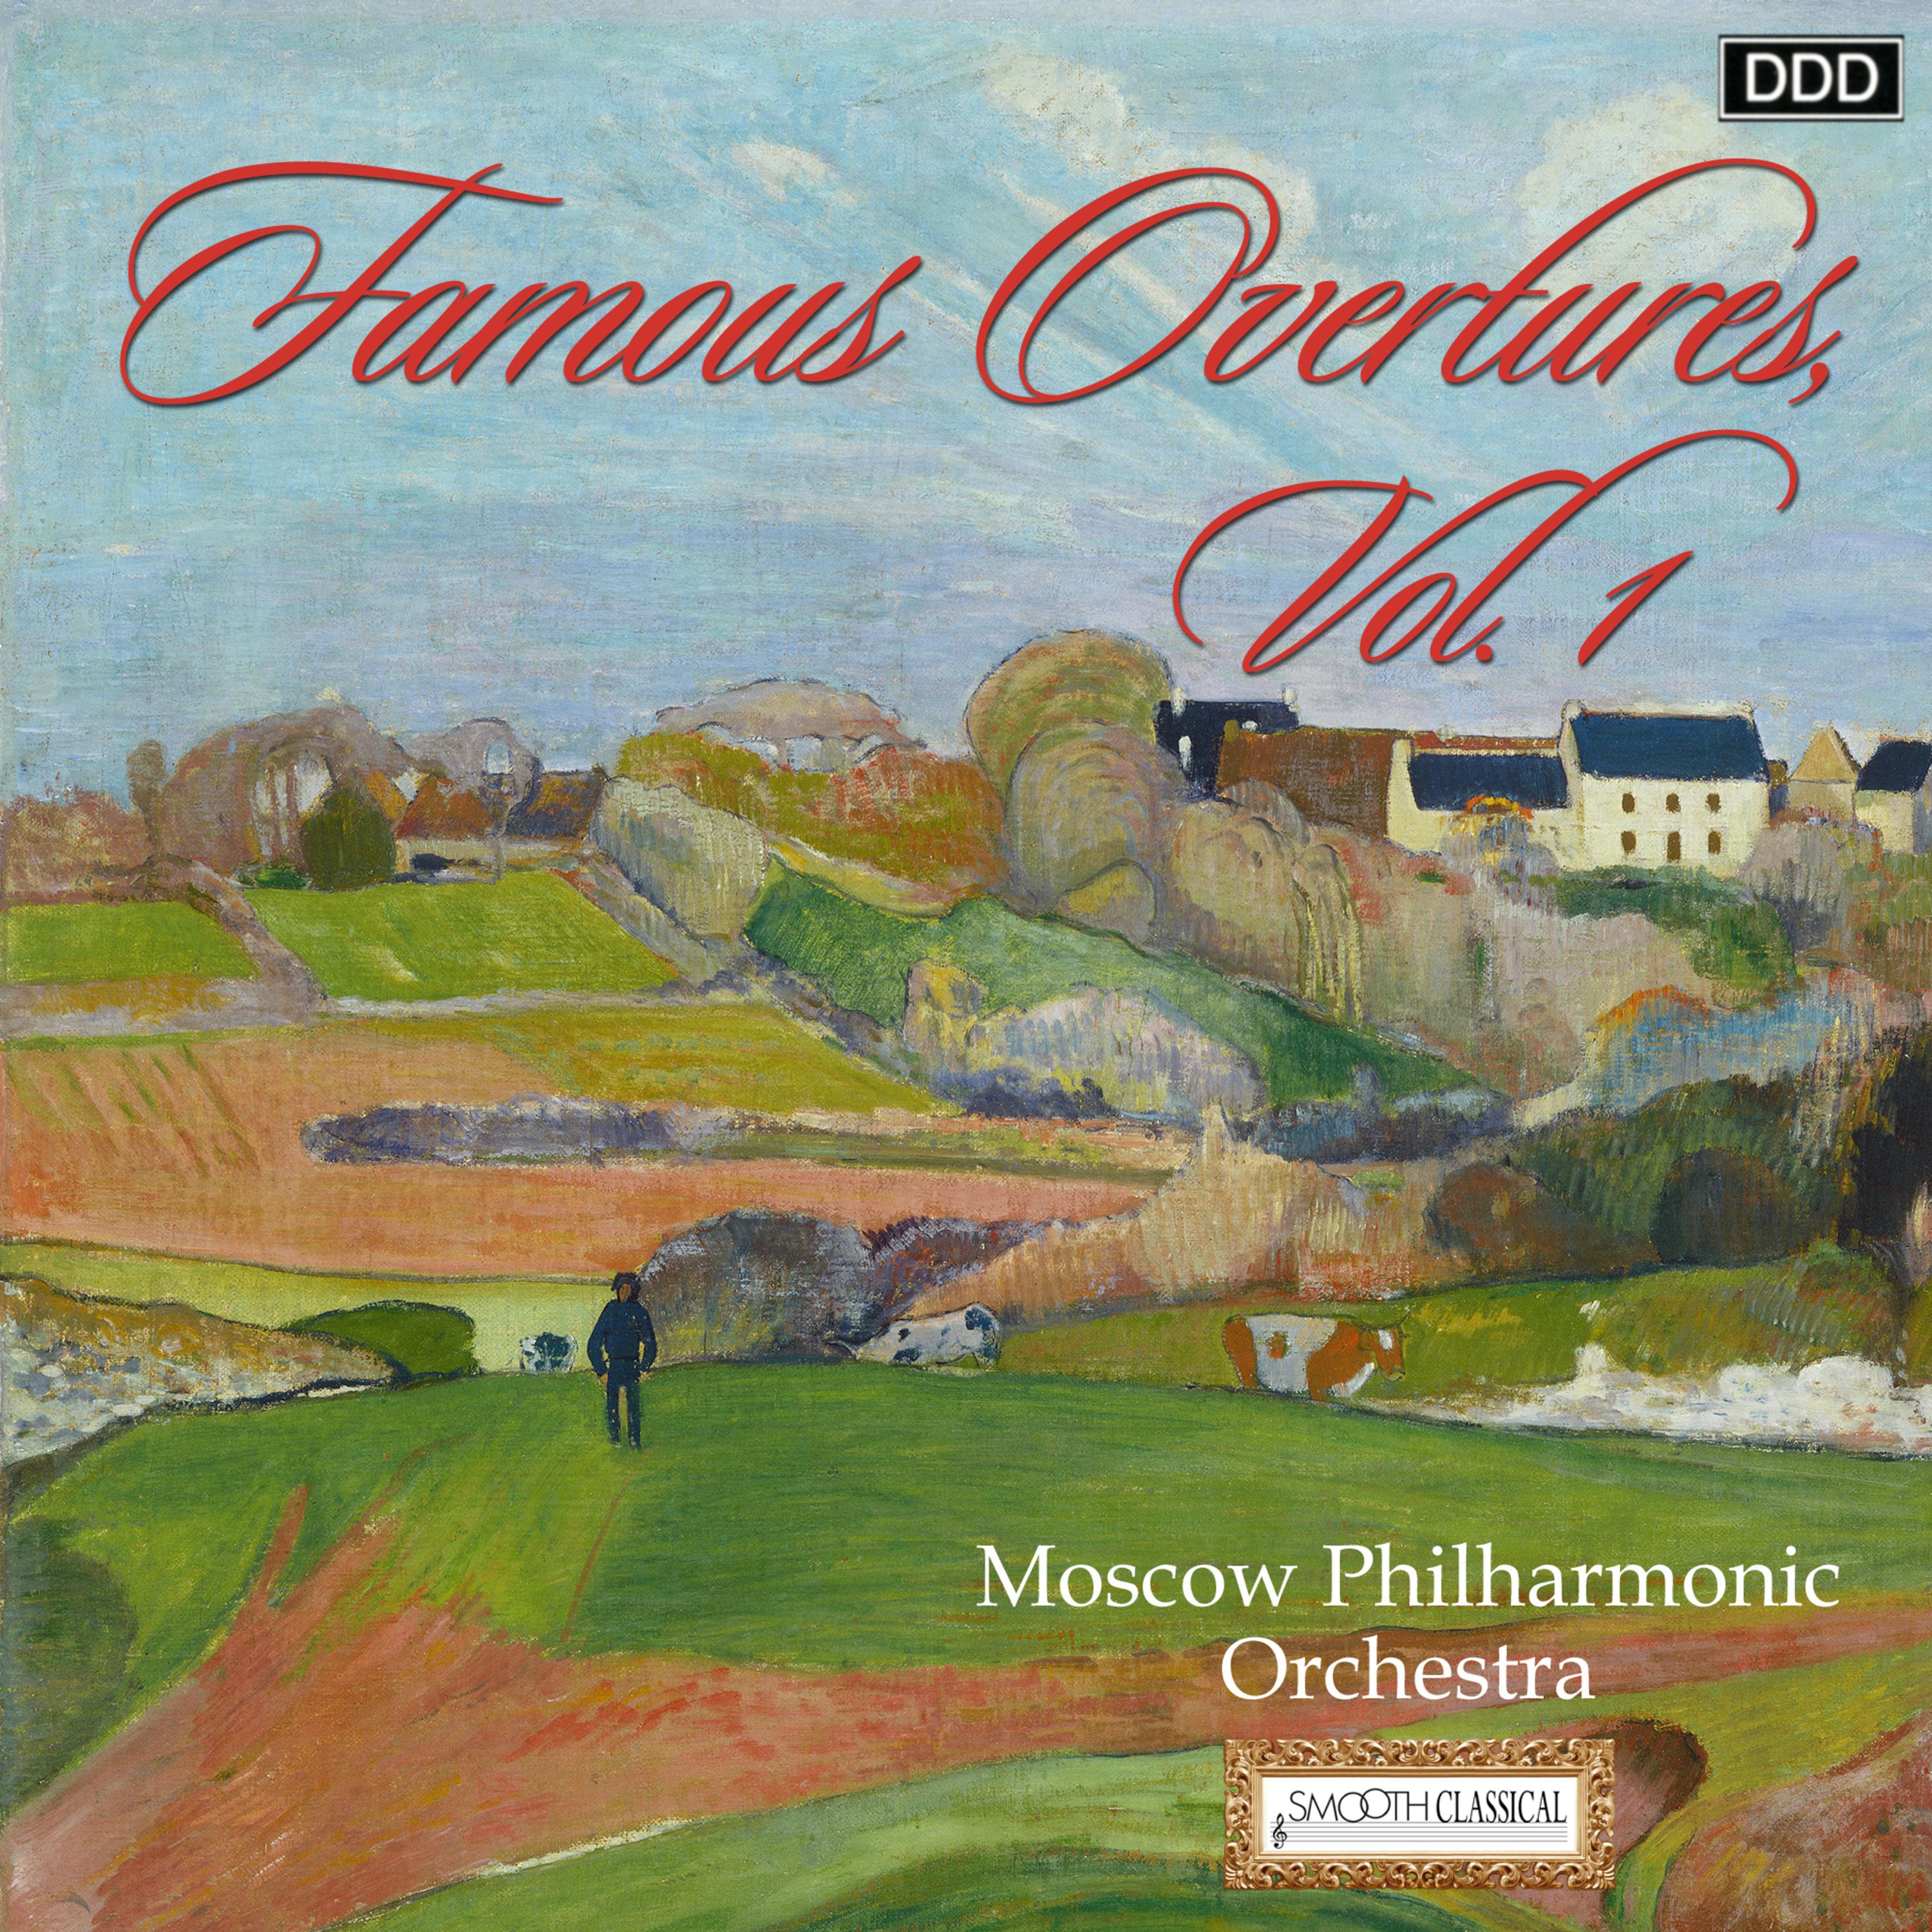 Guillaume Tell: Overture